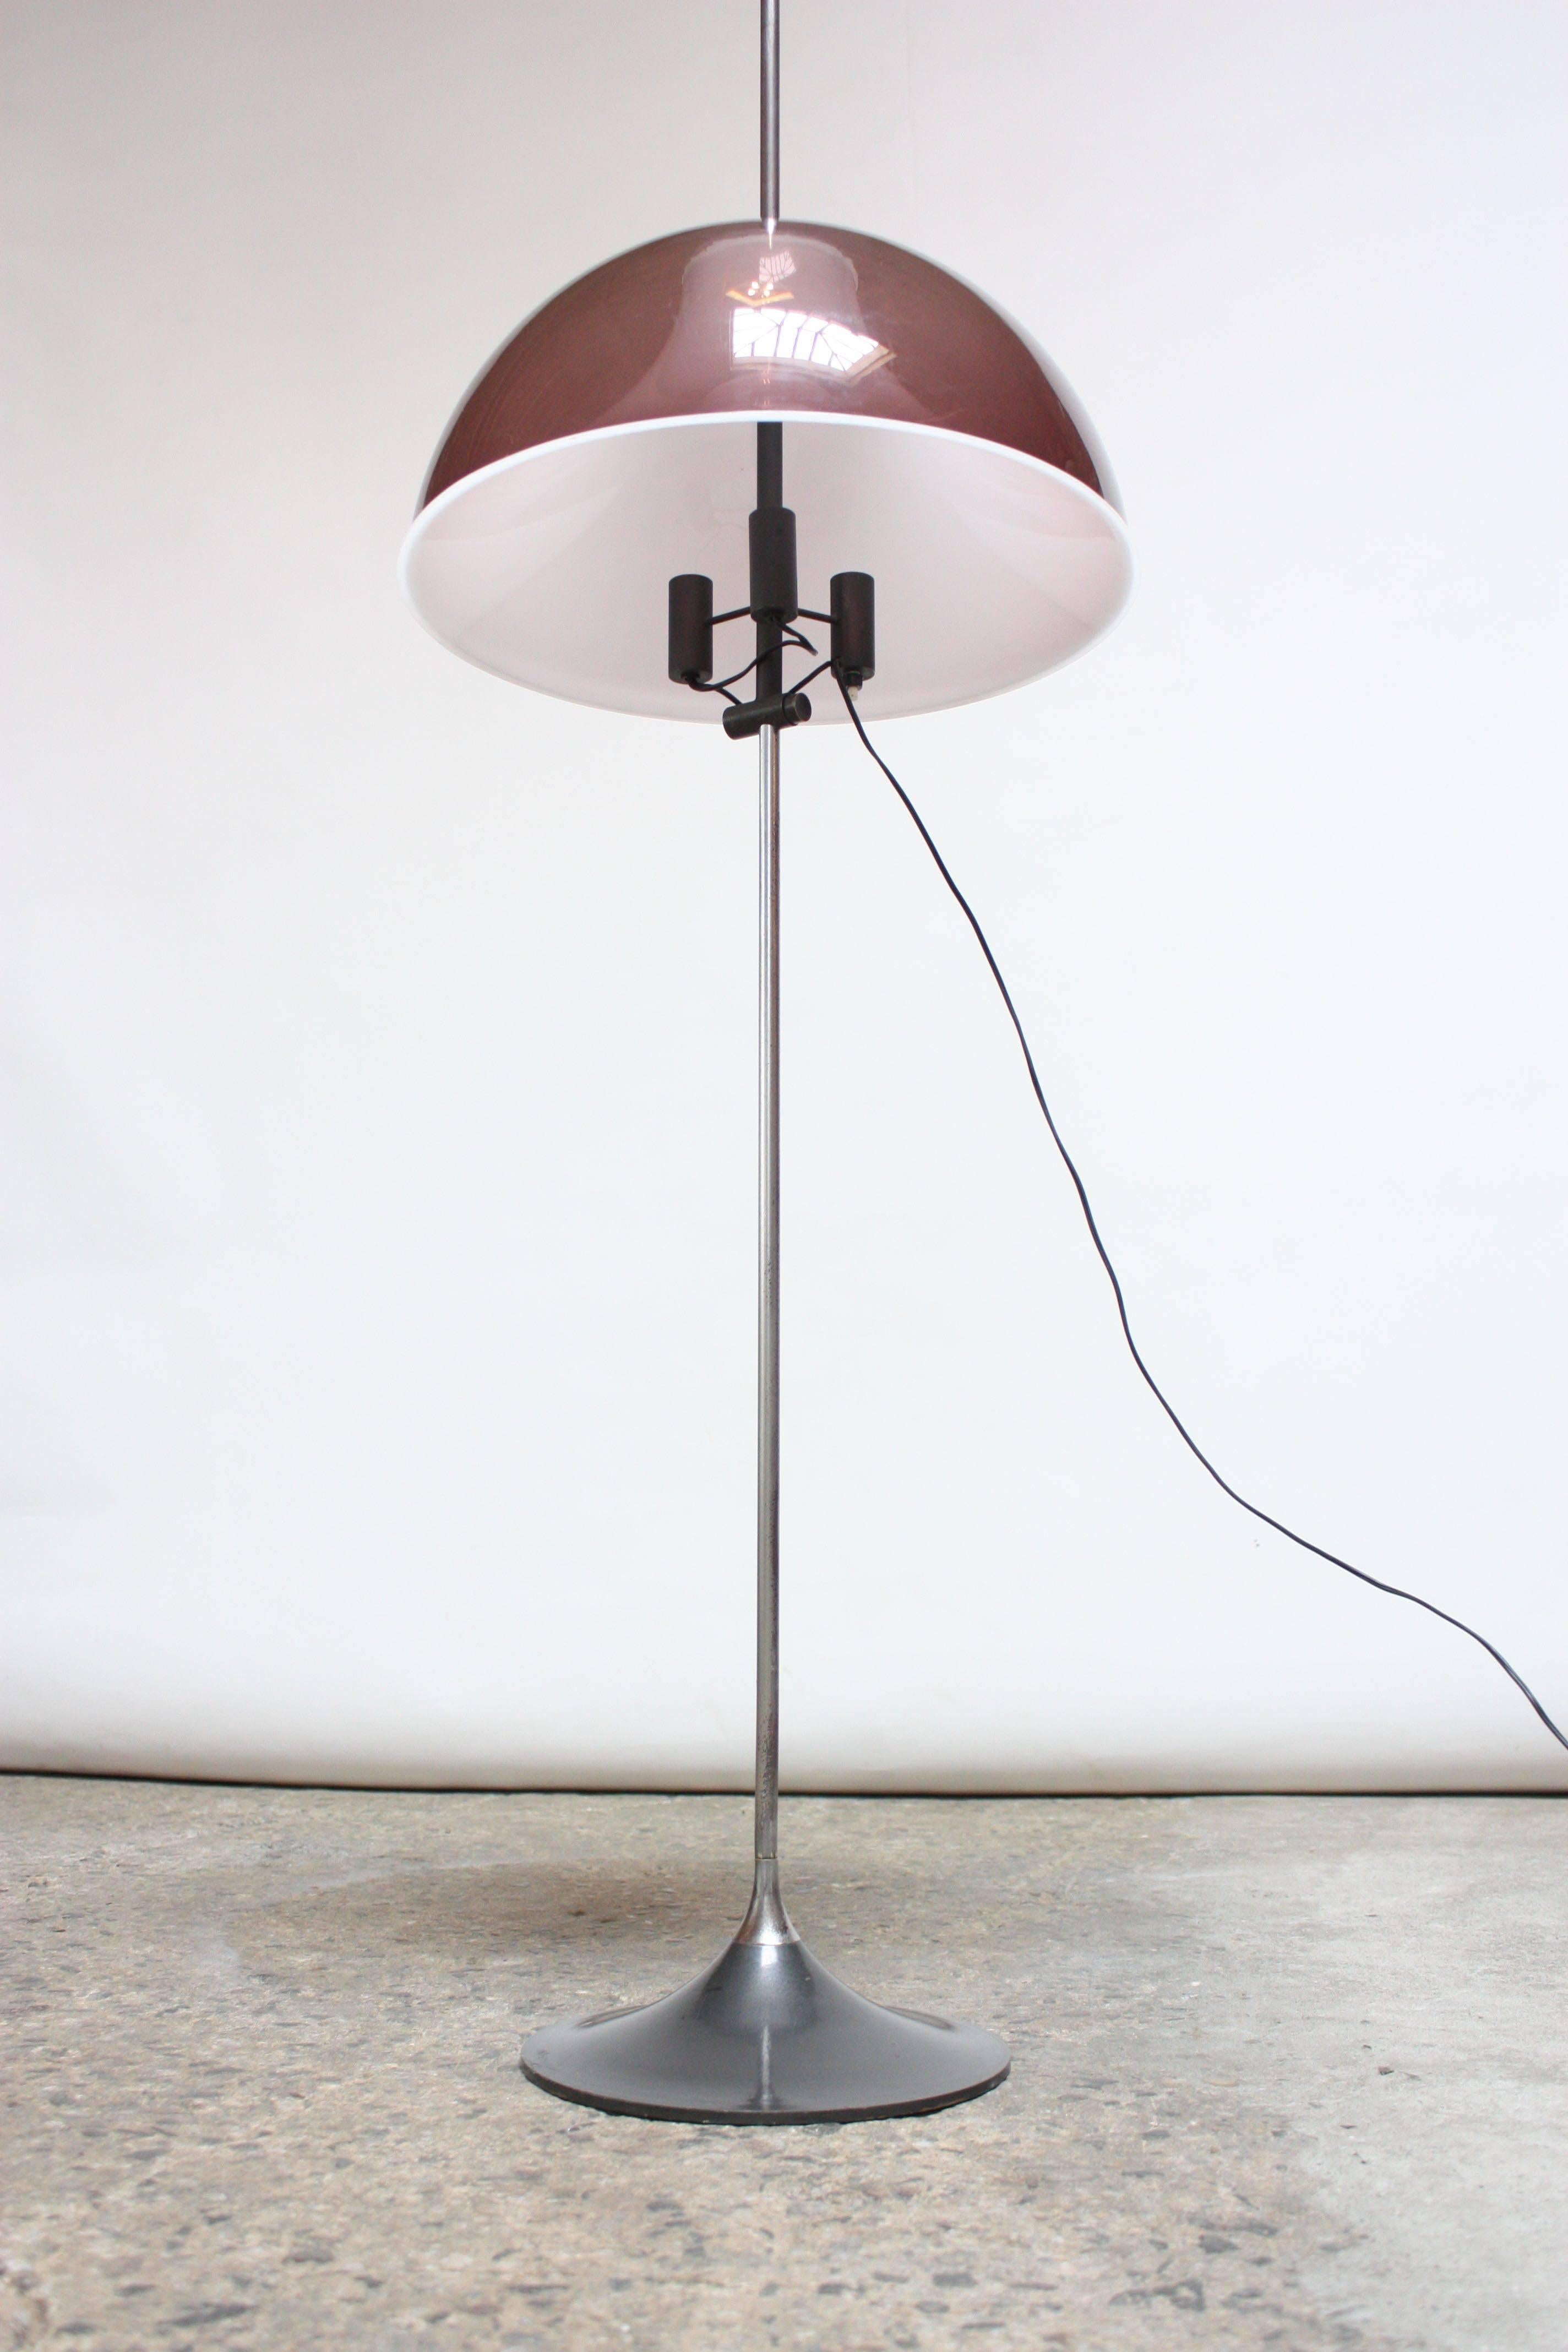 Mid-20th Century Italian Modern Adjustable Floor Lamp Attributed to Gino Sarfatti For Sale